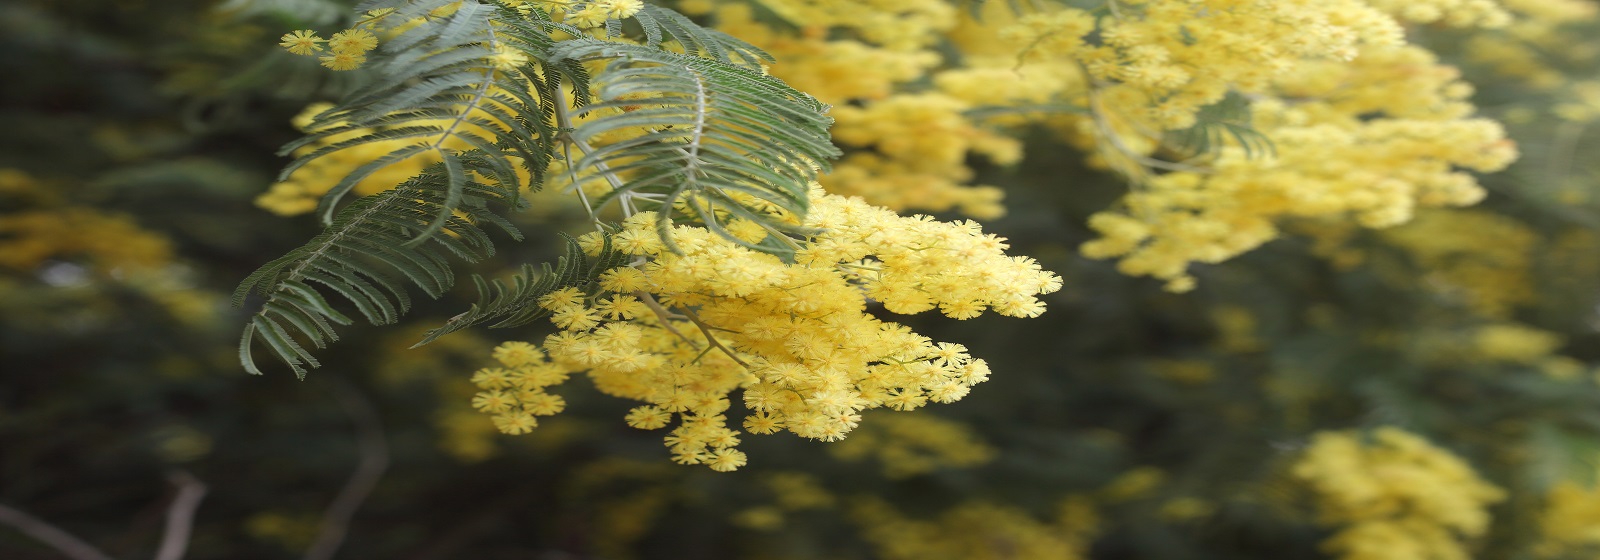 yellow flowers image slide